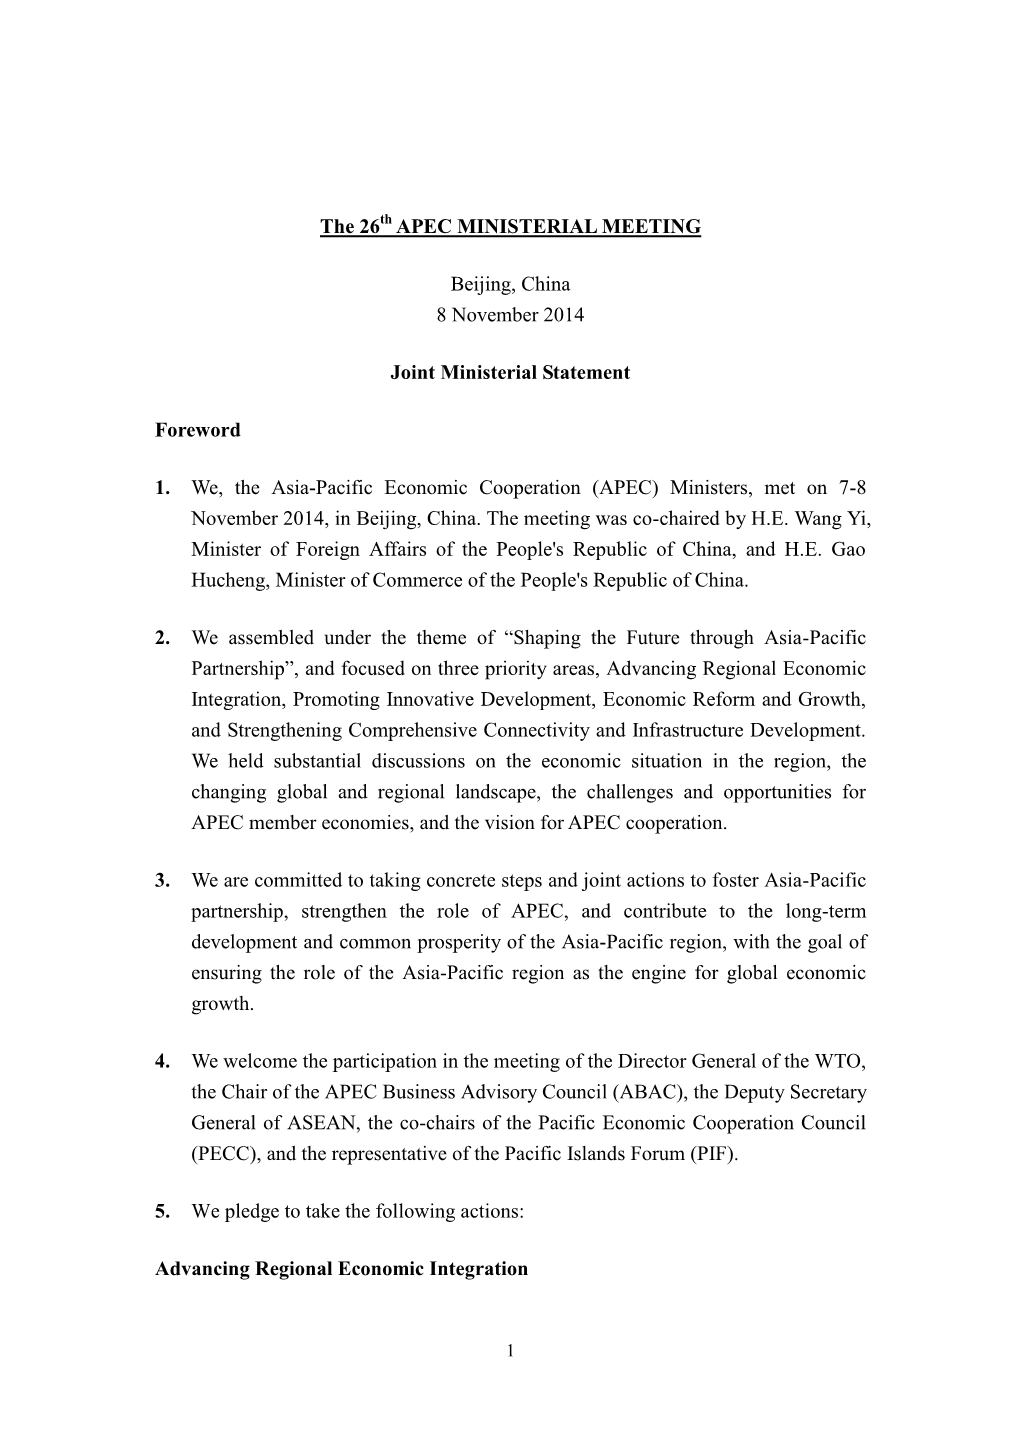 APEC Ministerial Statement